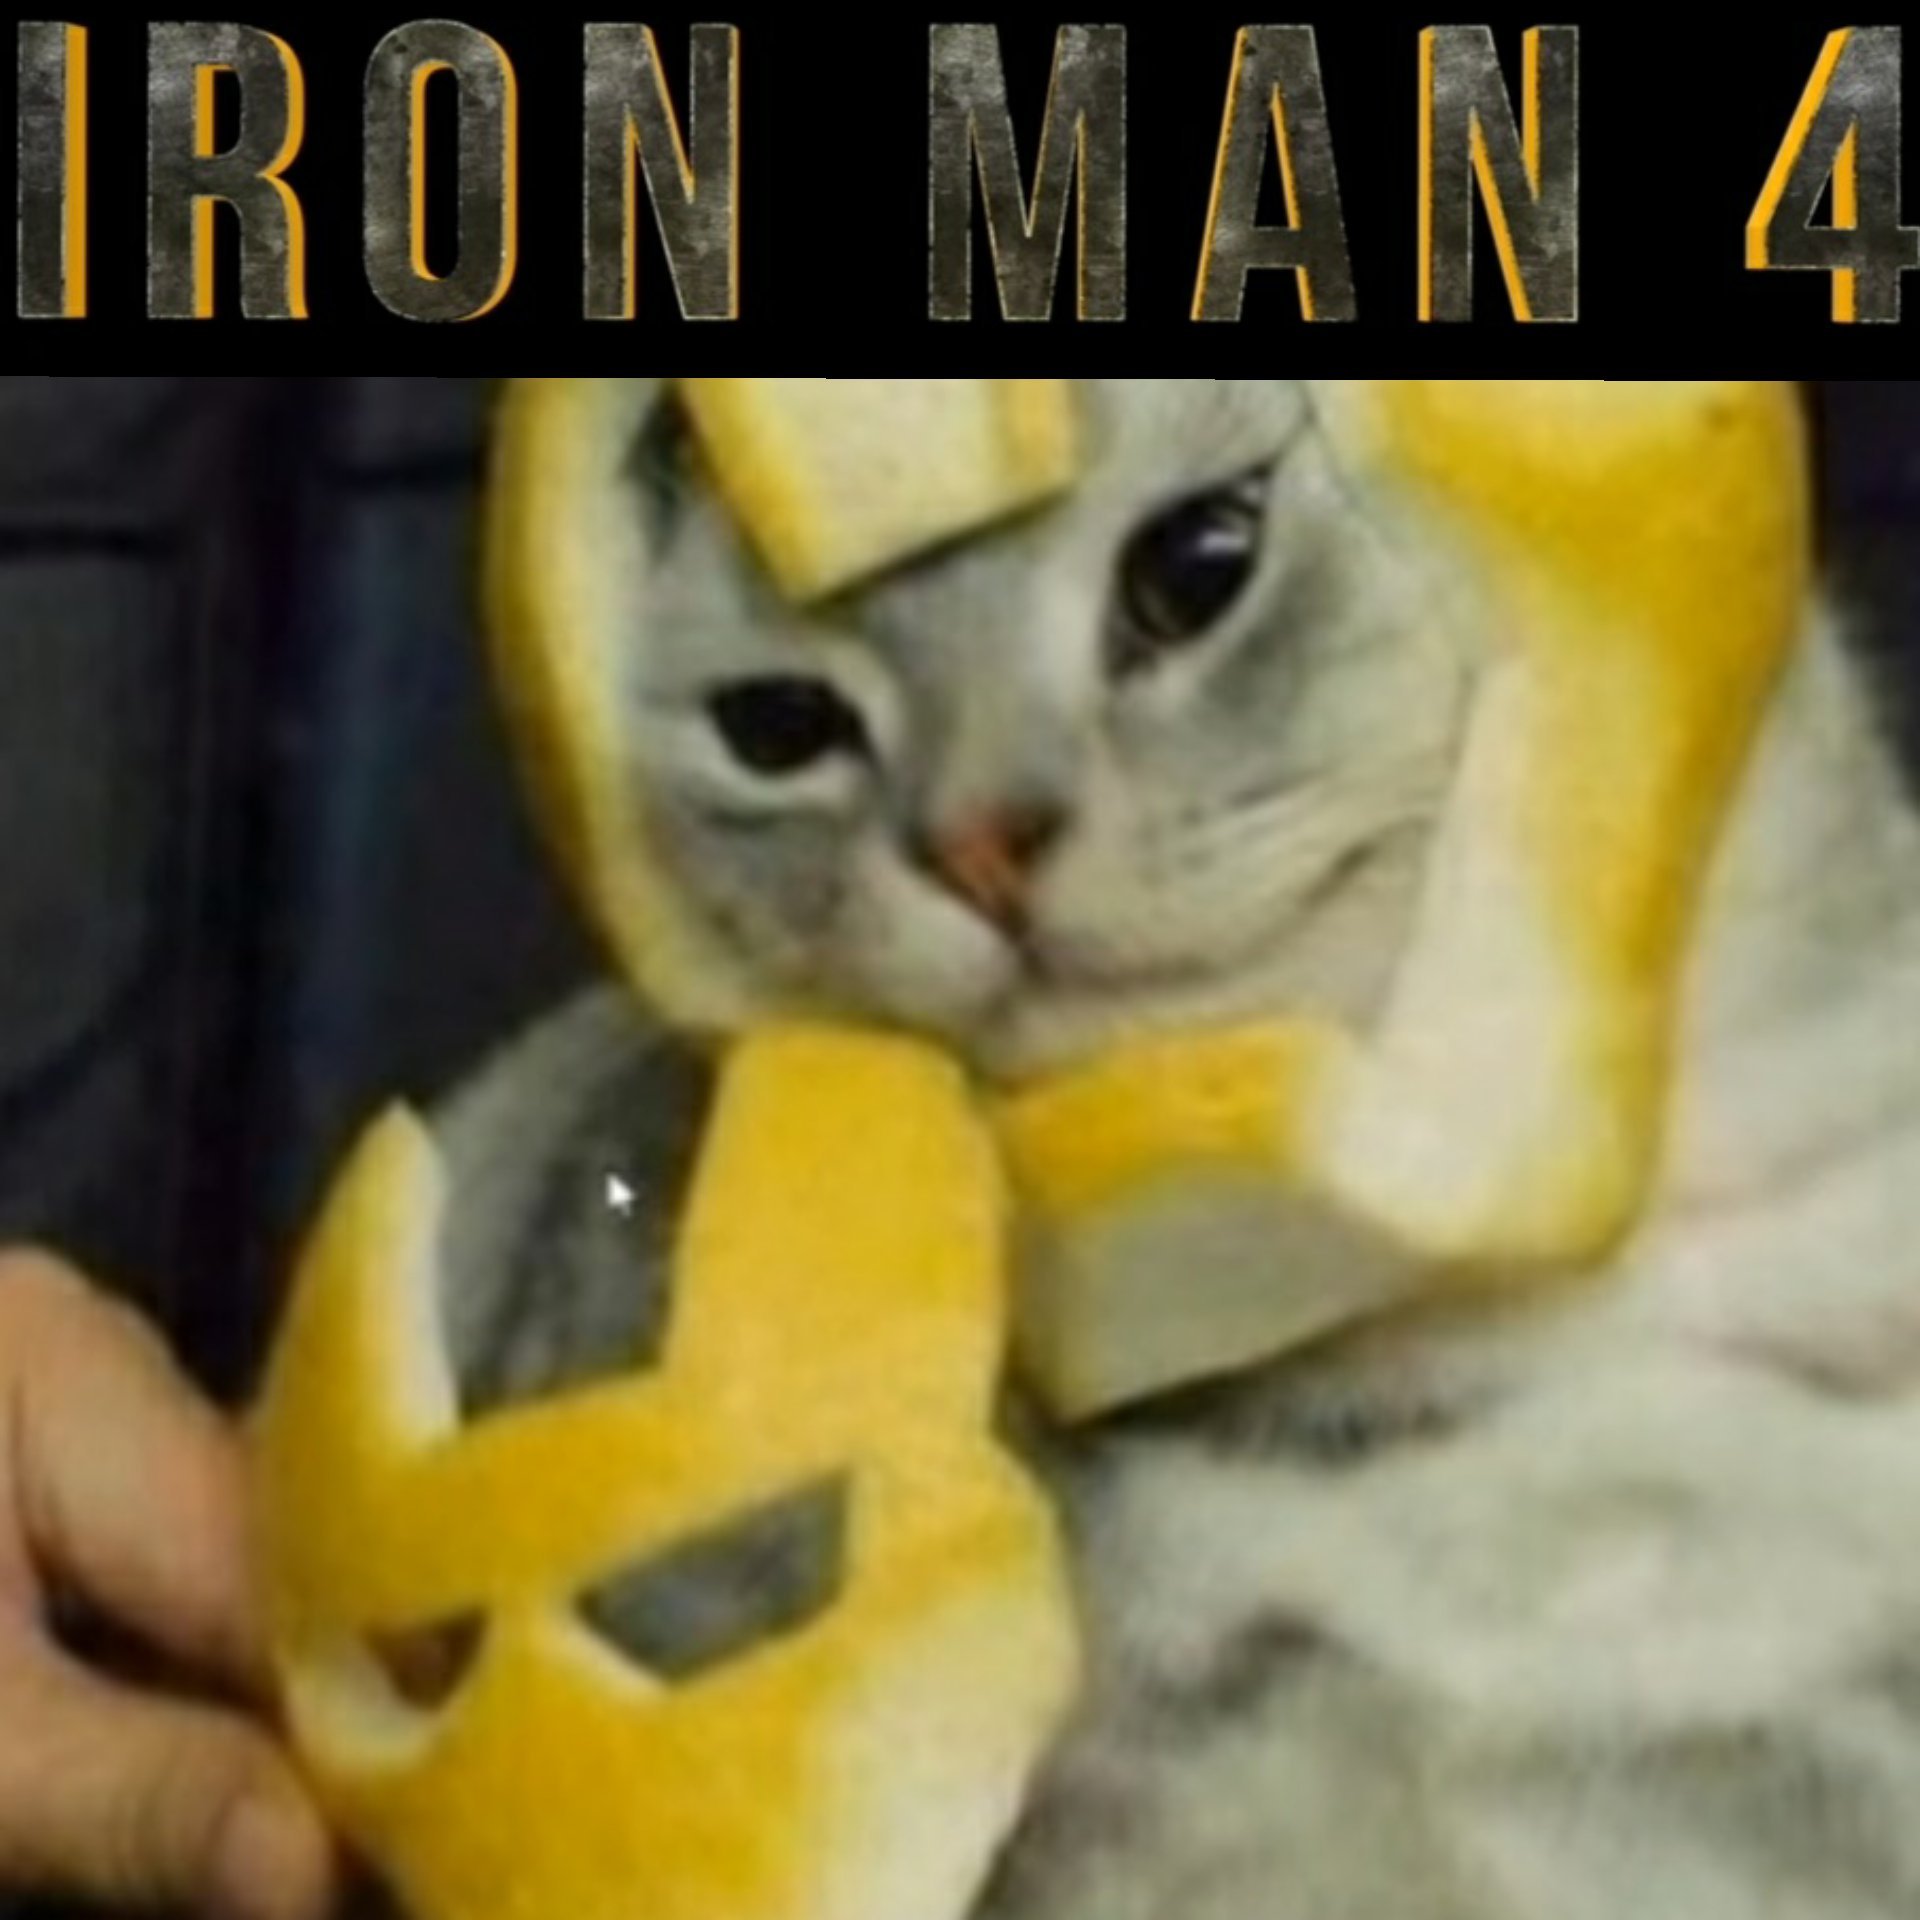 Iron man 4 confirmado - meme